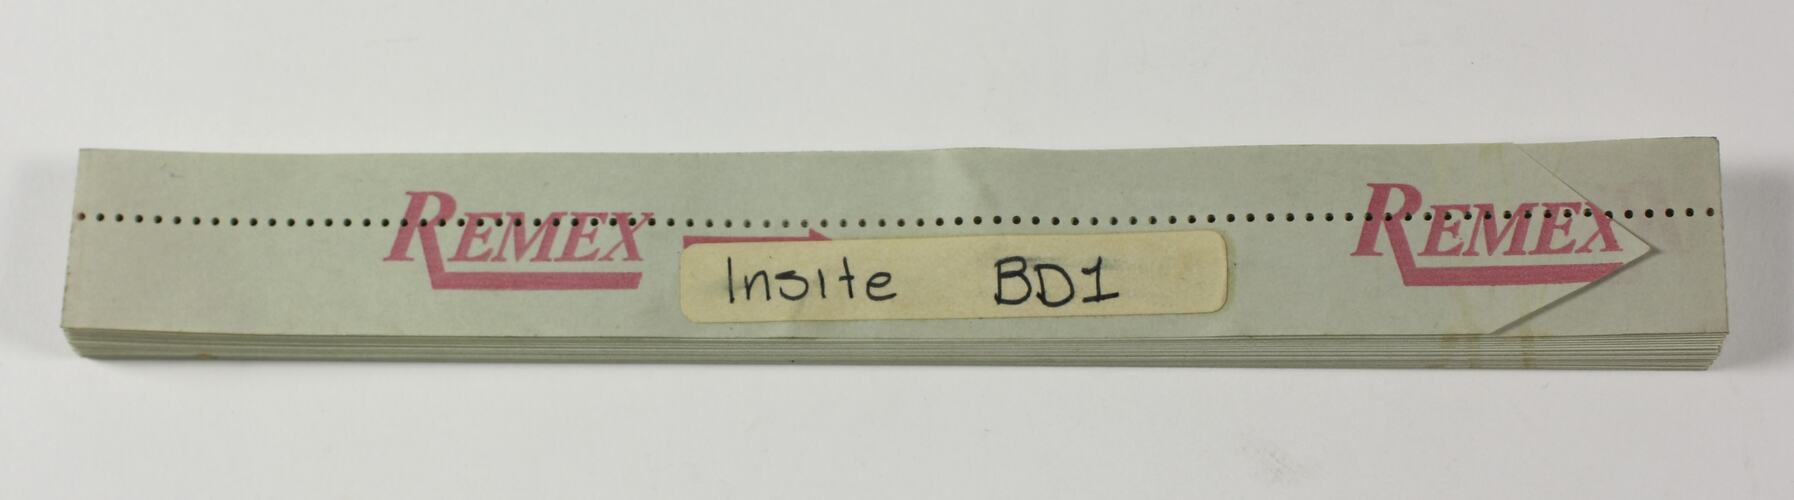 Paper Tape - Insite BD1